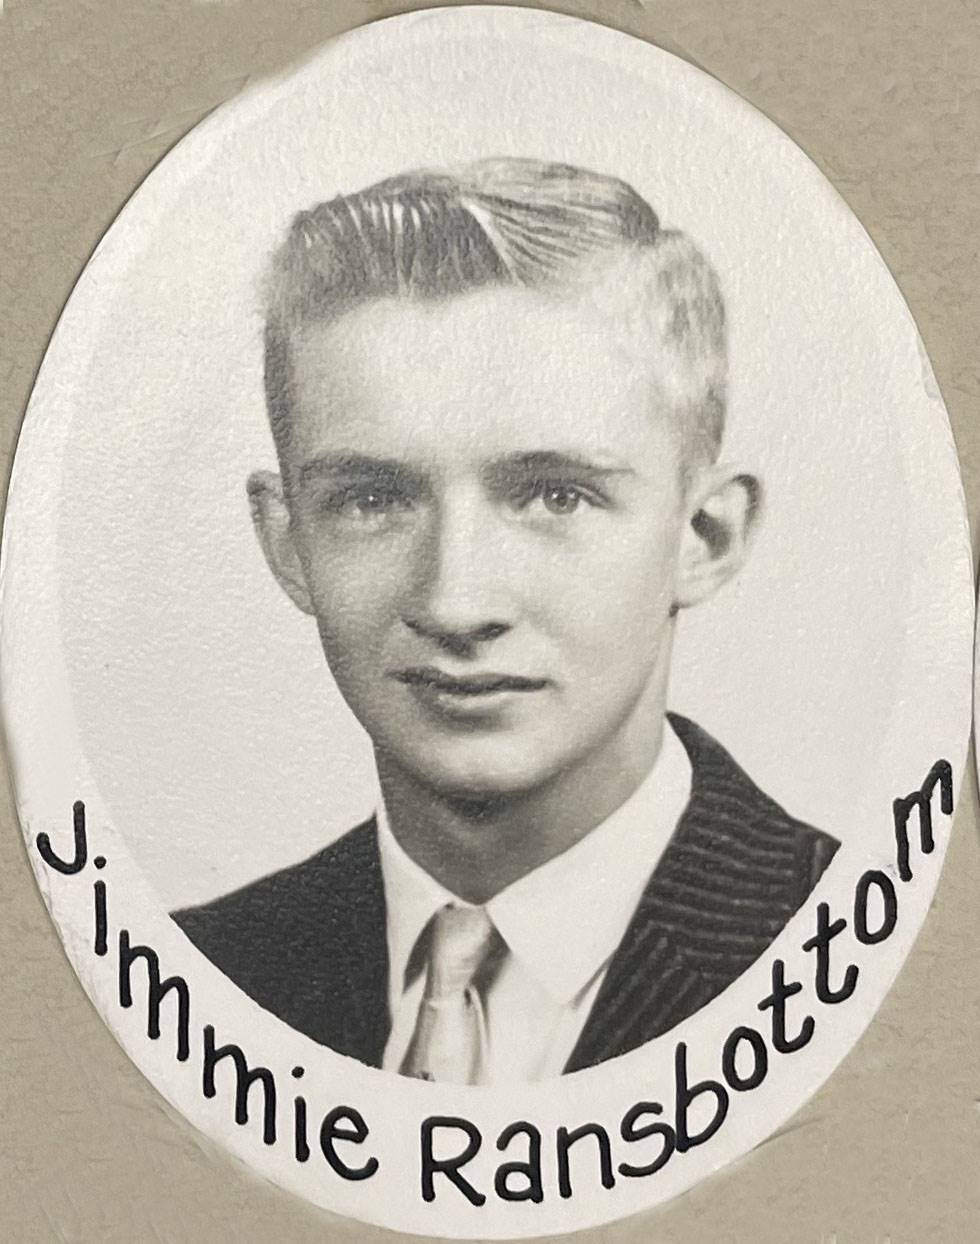 Jimmie Ransbottom